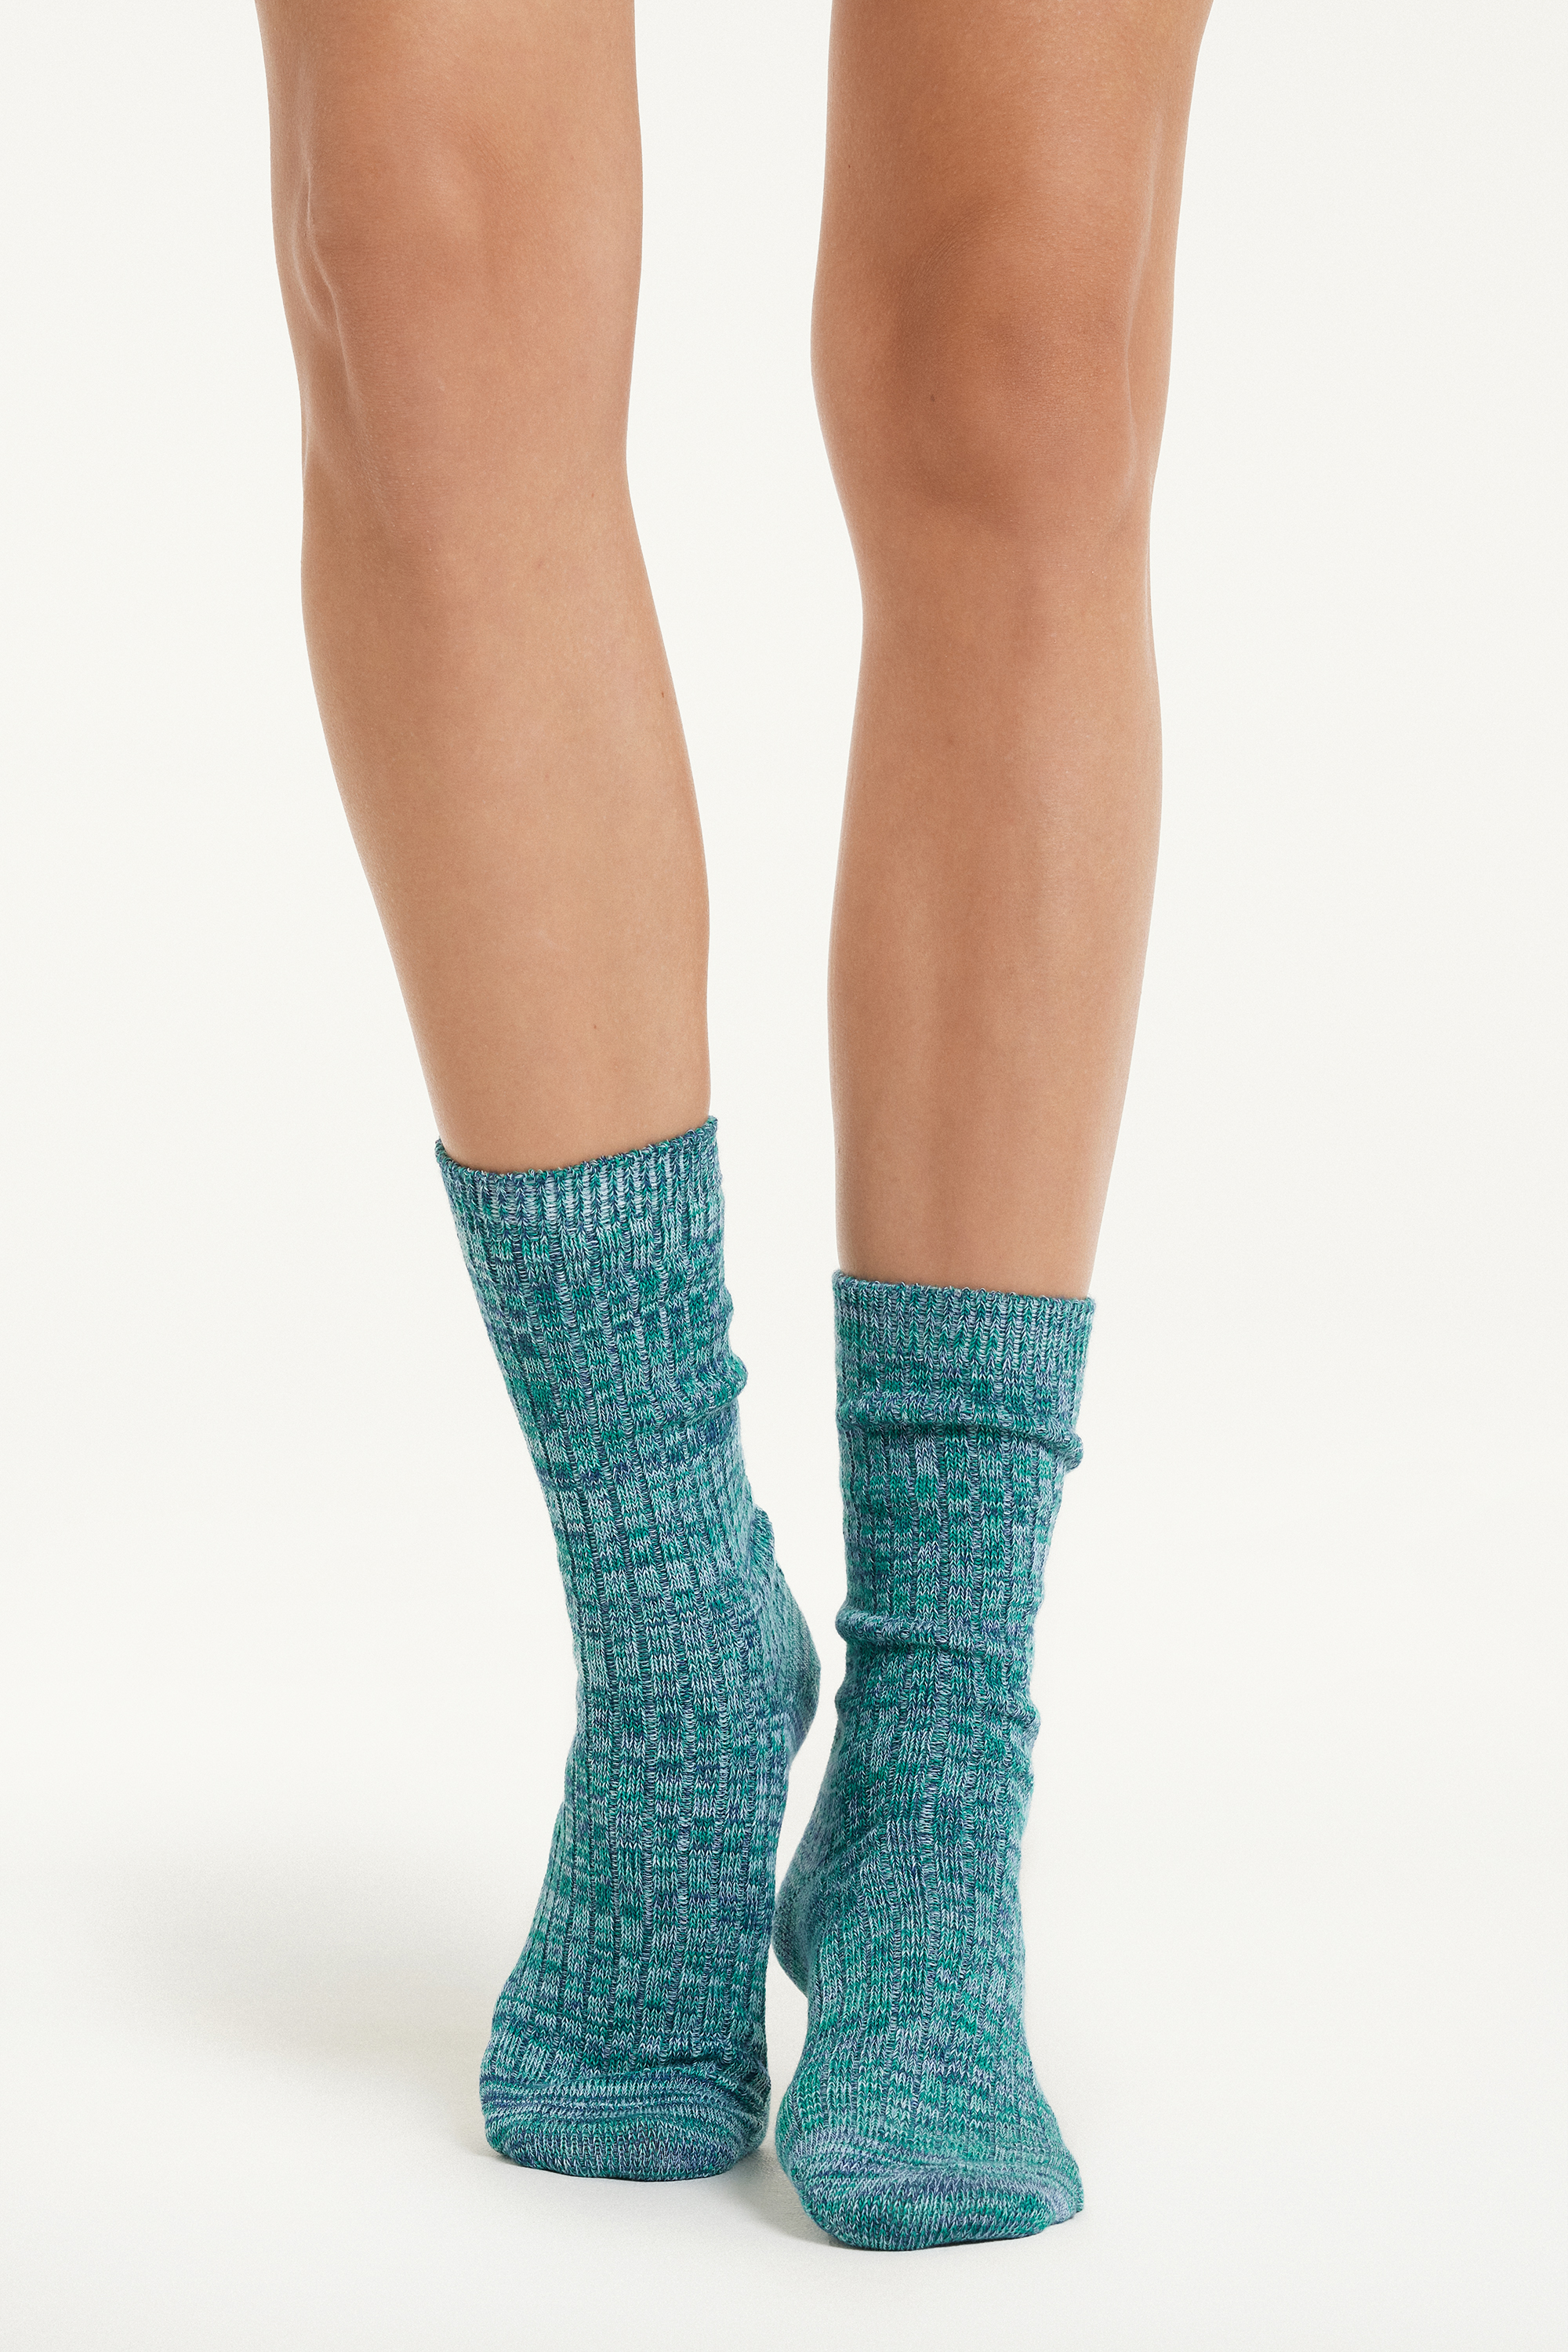 3/4 Length Thick Multi-Coloured Socks